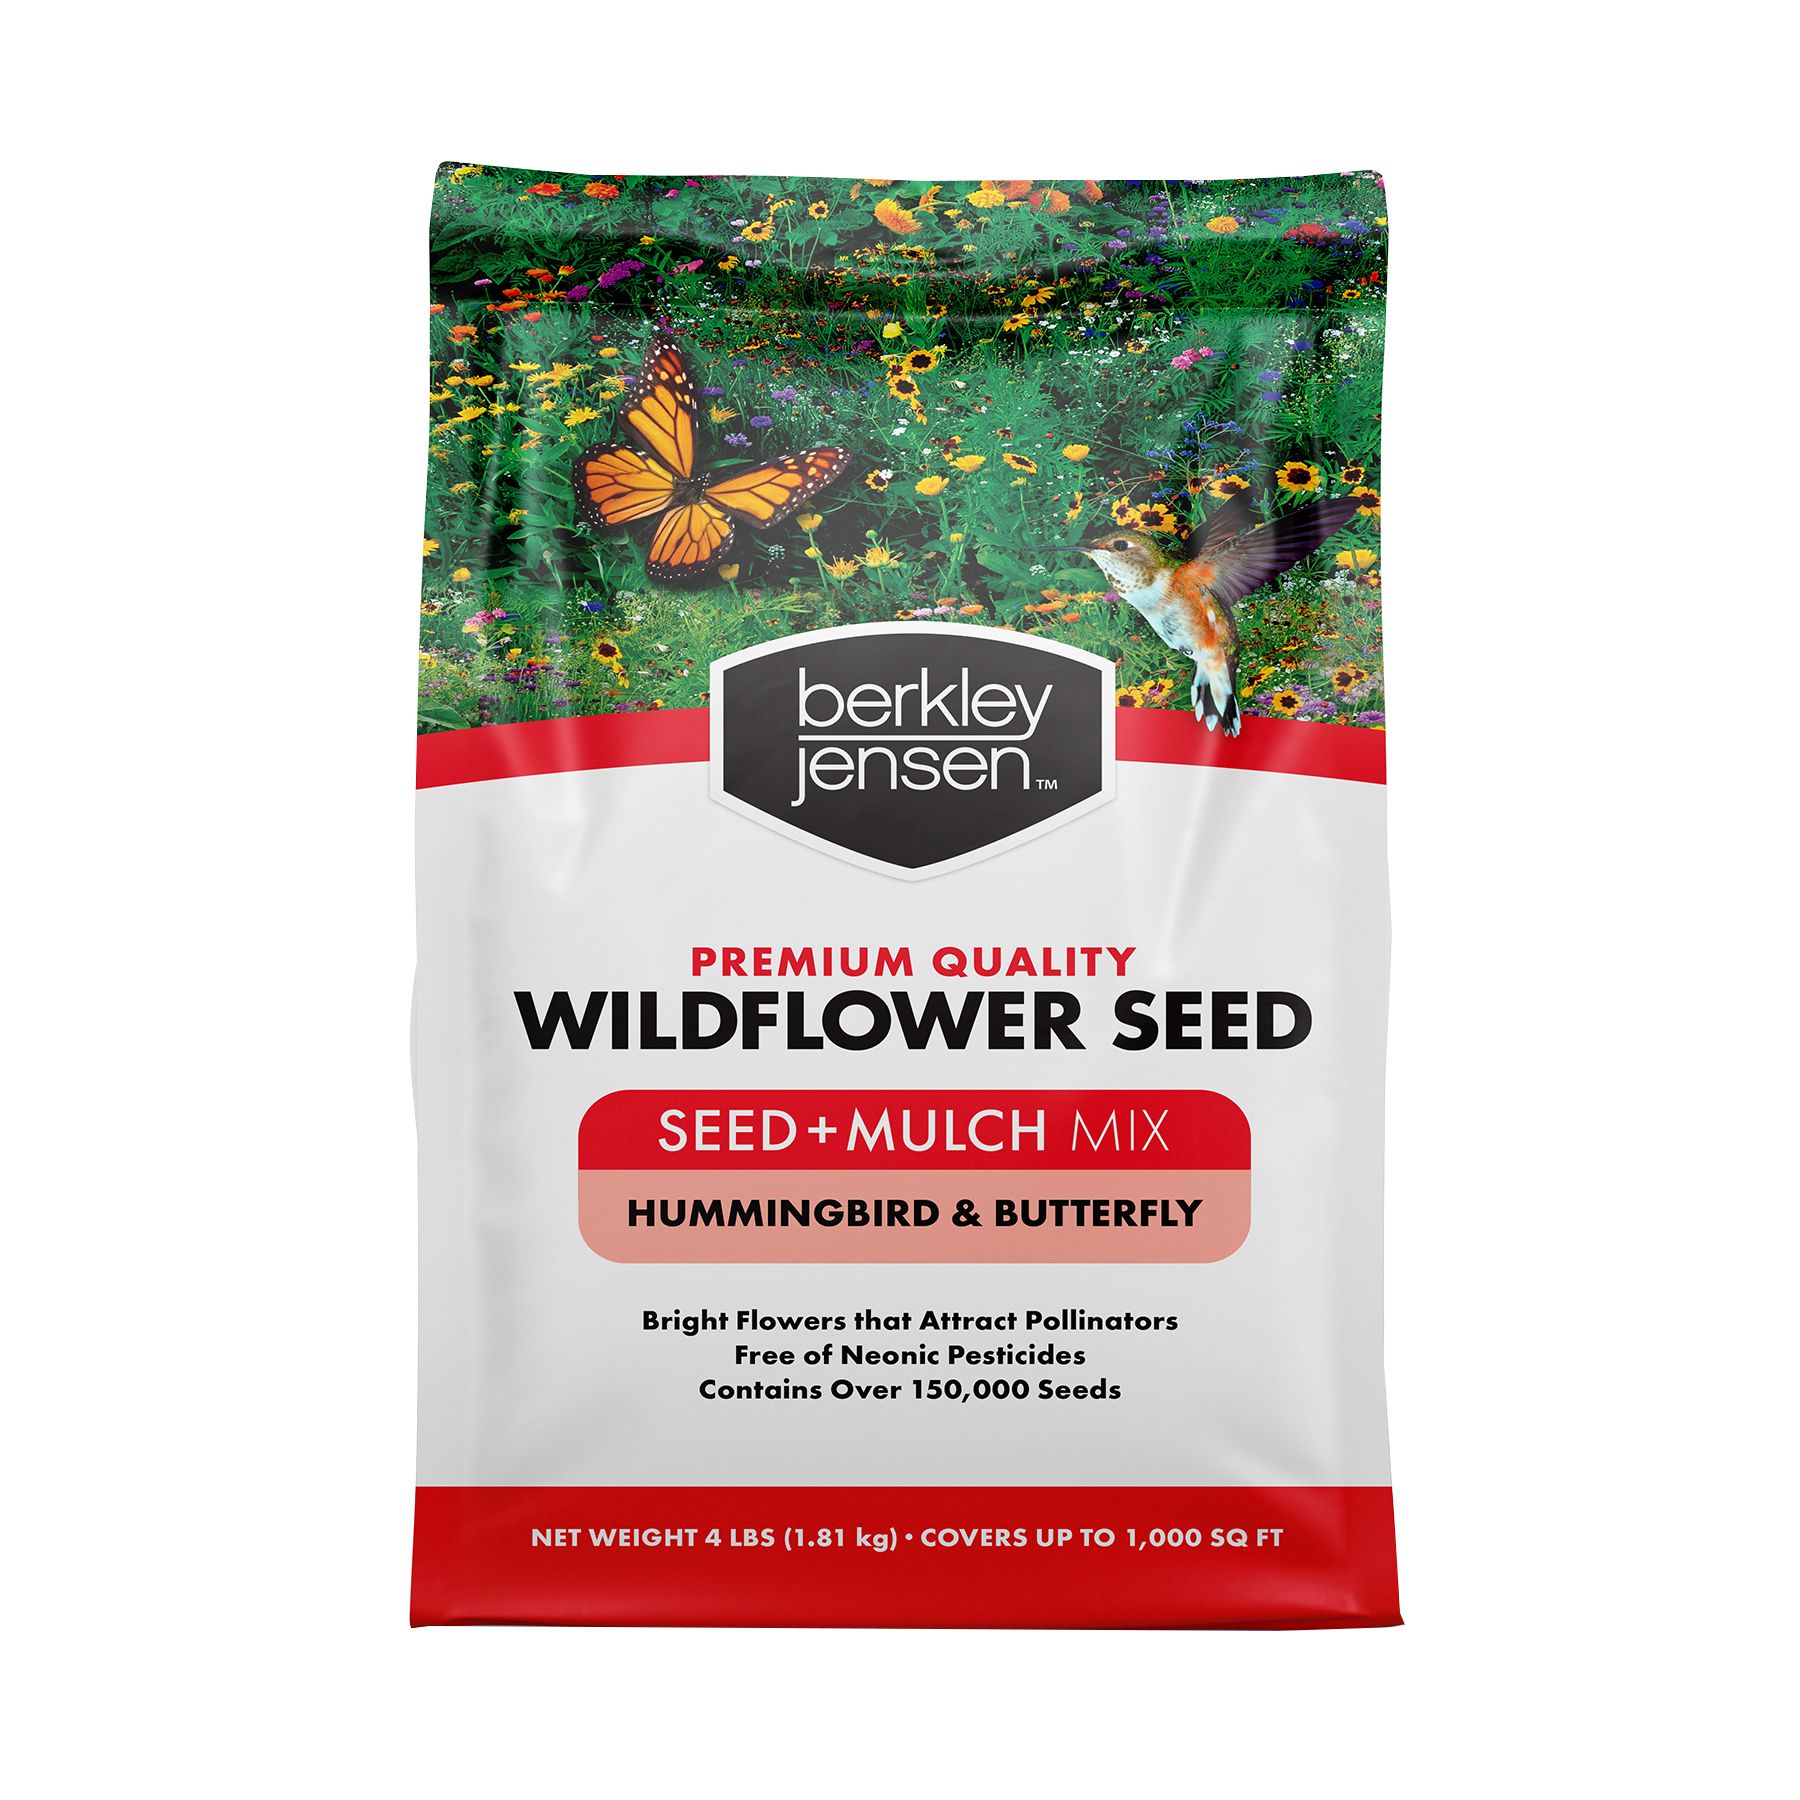 Berkley Jensen Wildflower Seed and Mulch All in One, 4 lbs.